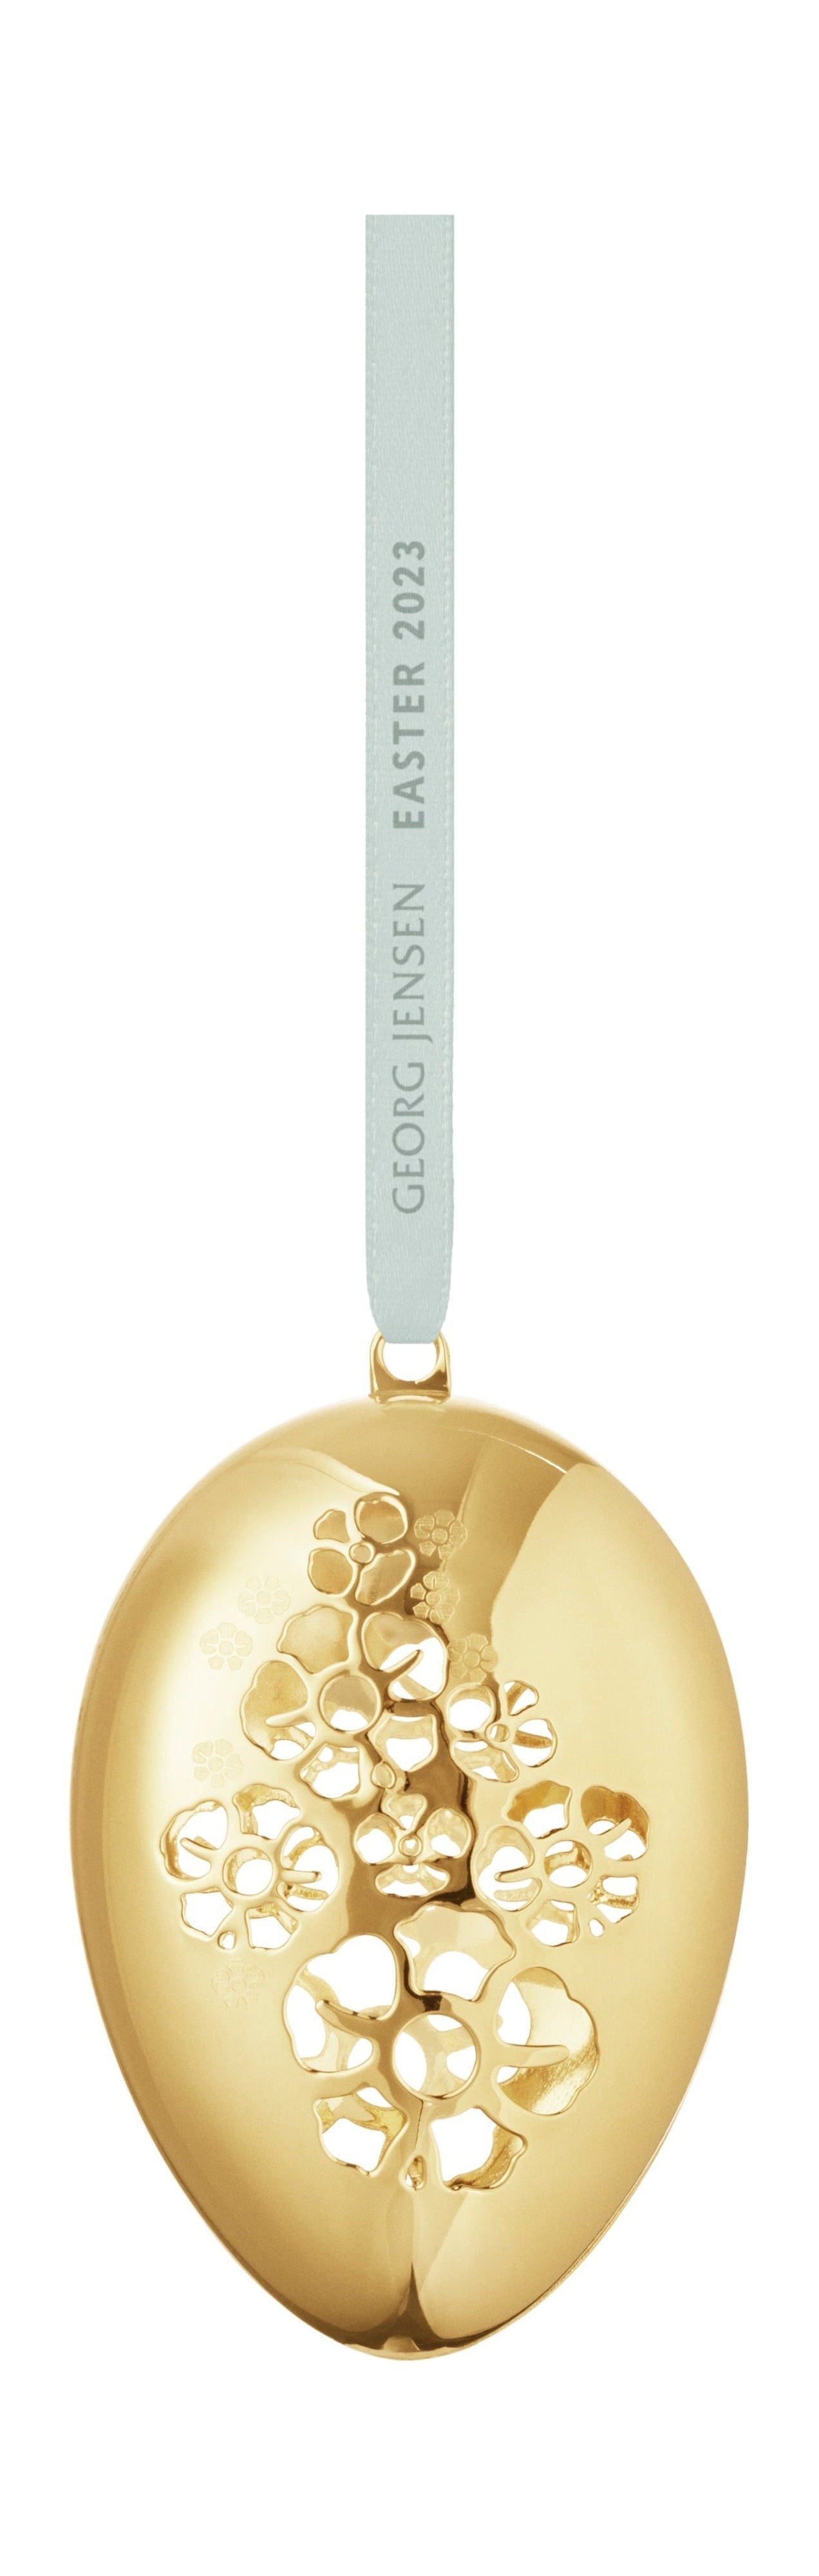 Georg Jensen Paasei ornament goud 2023